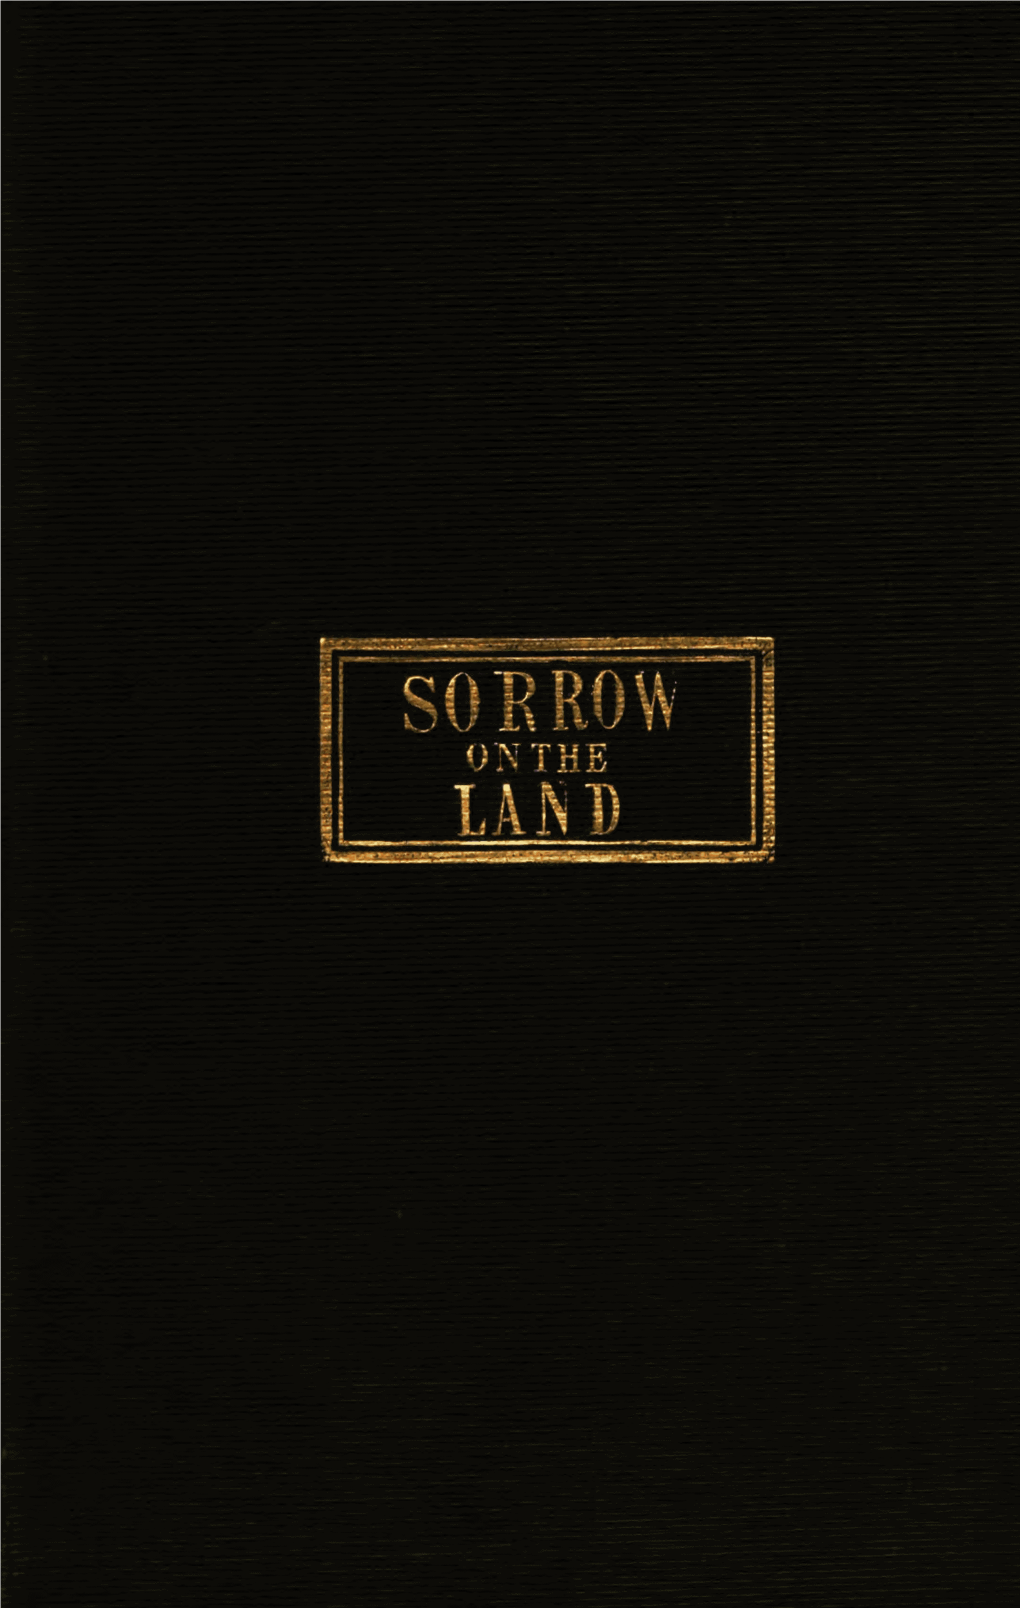 Sorrow on the Land